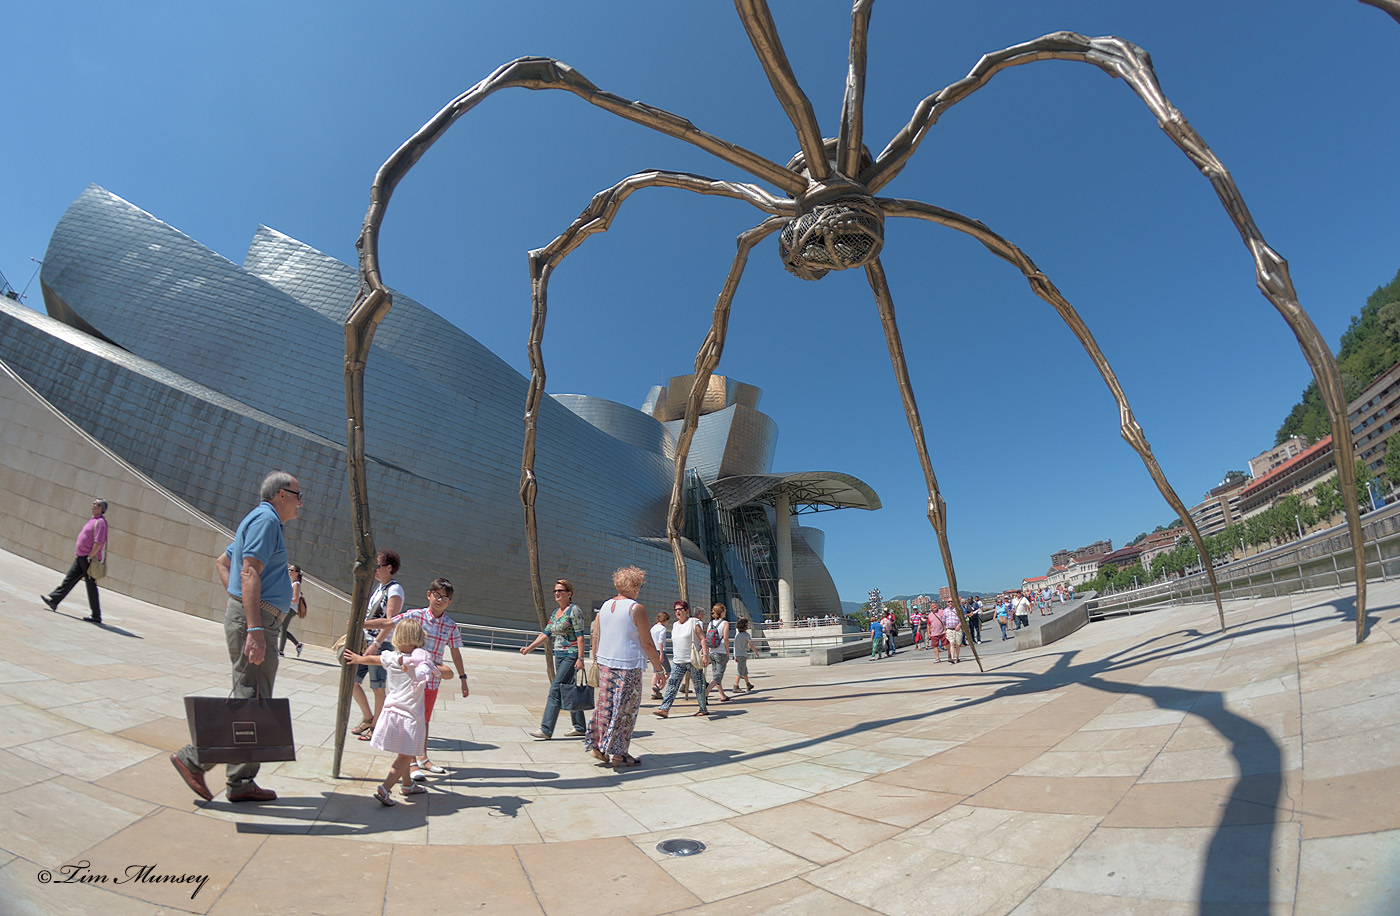 Spider of Bilbao